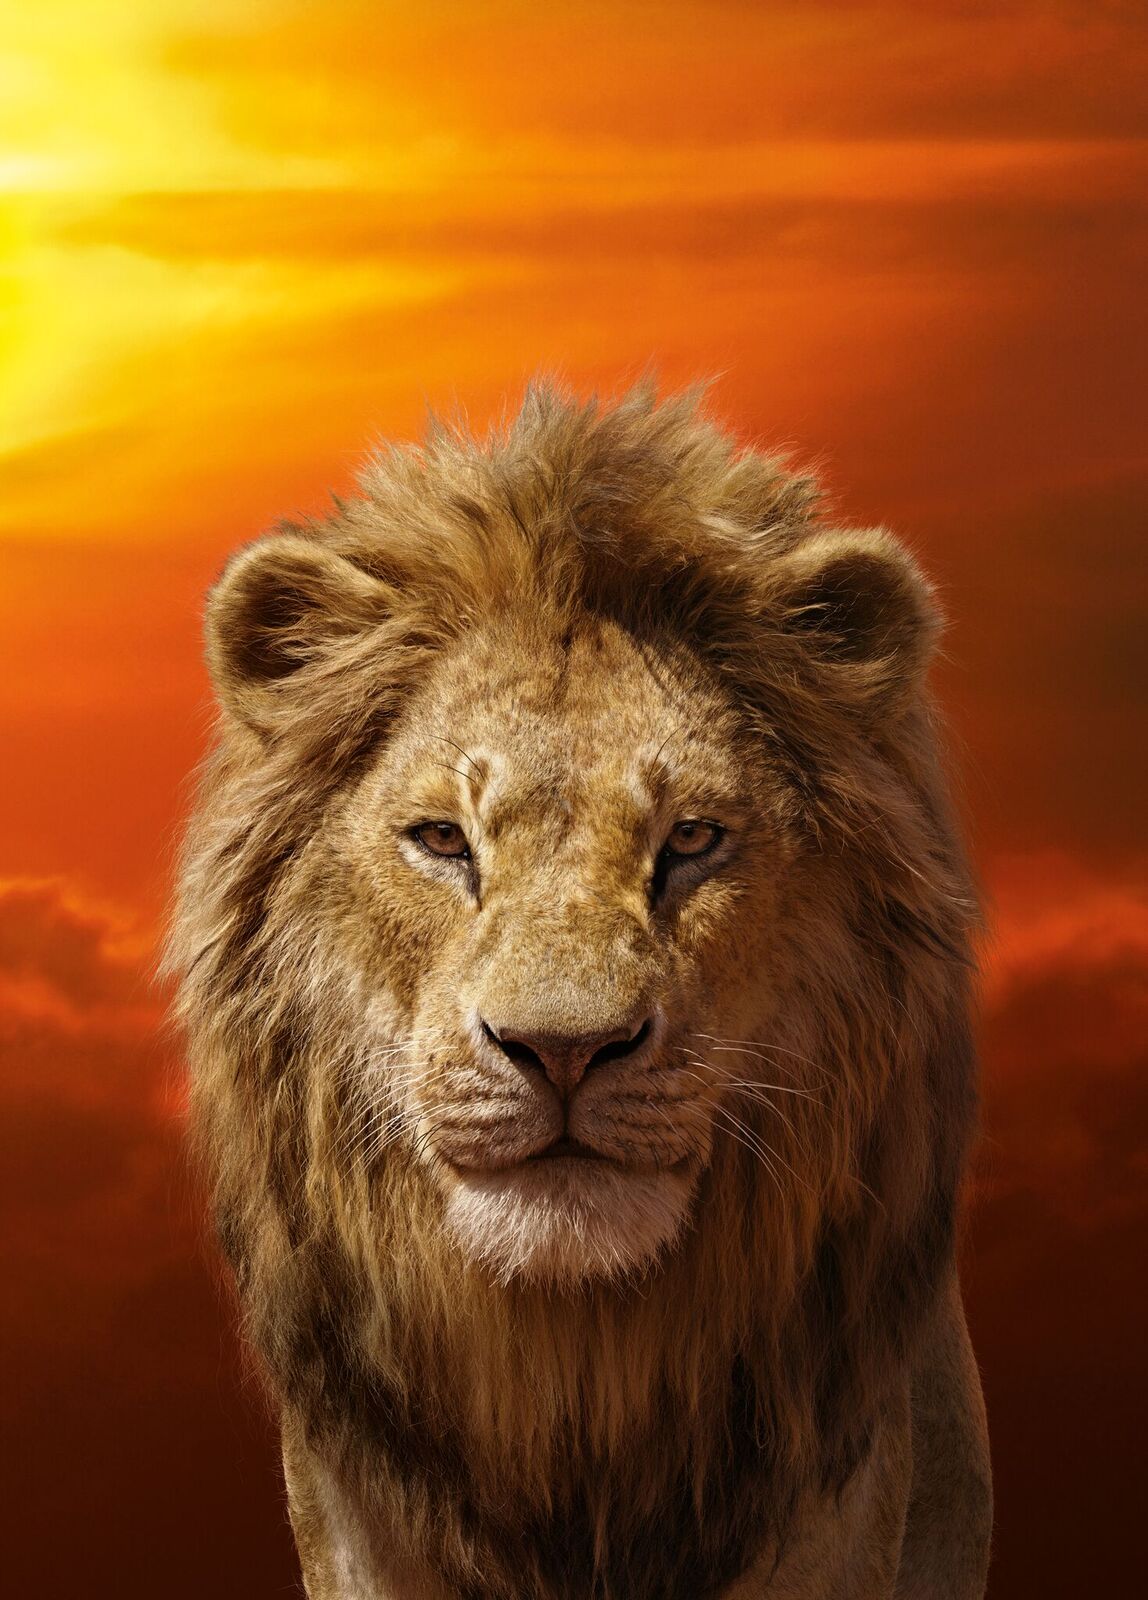 The Lion King 19 Simba Textless By Mintmovi3 On Deviantart